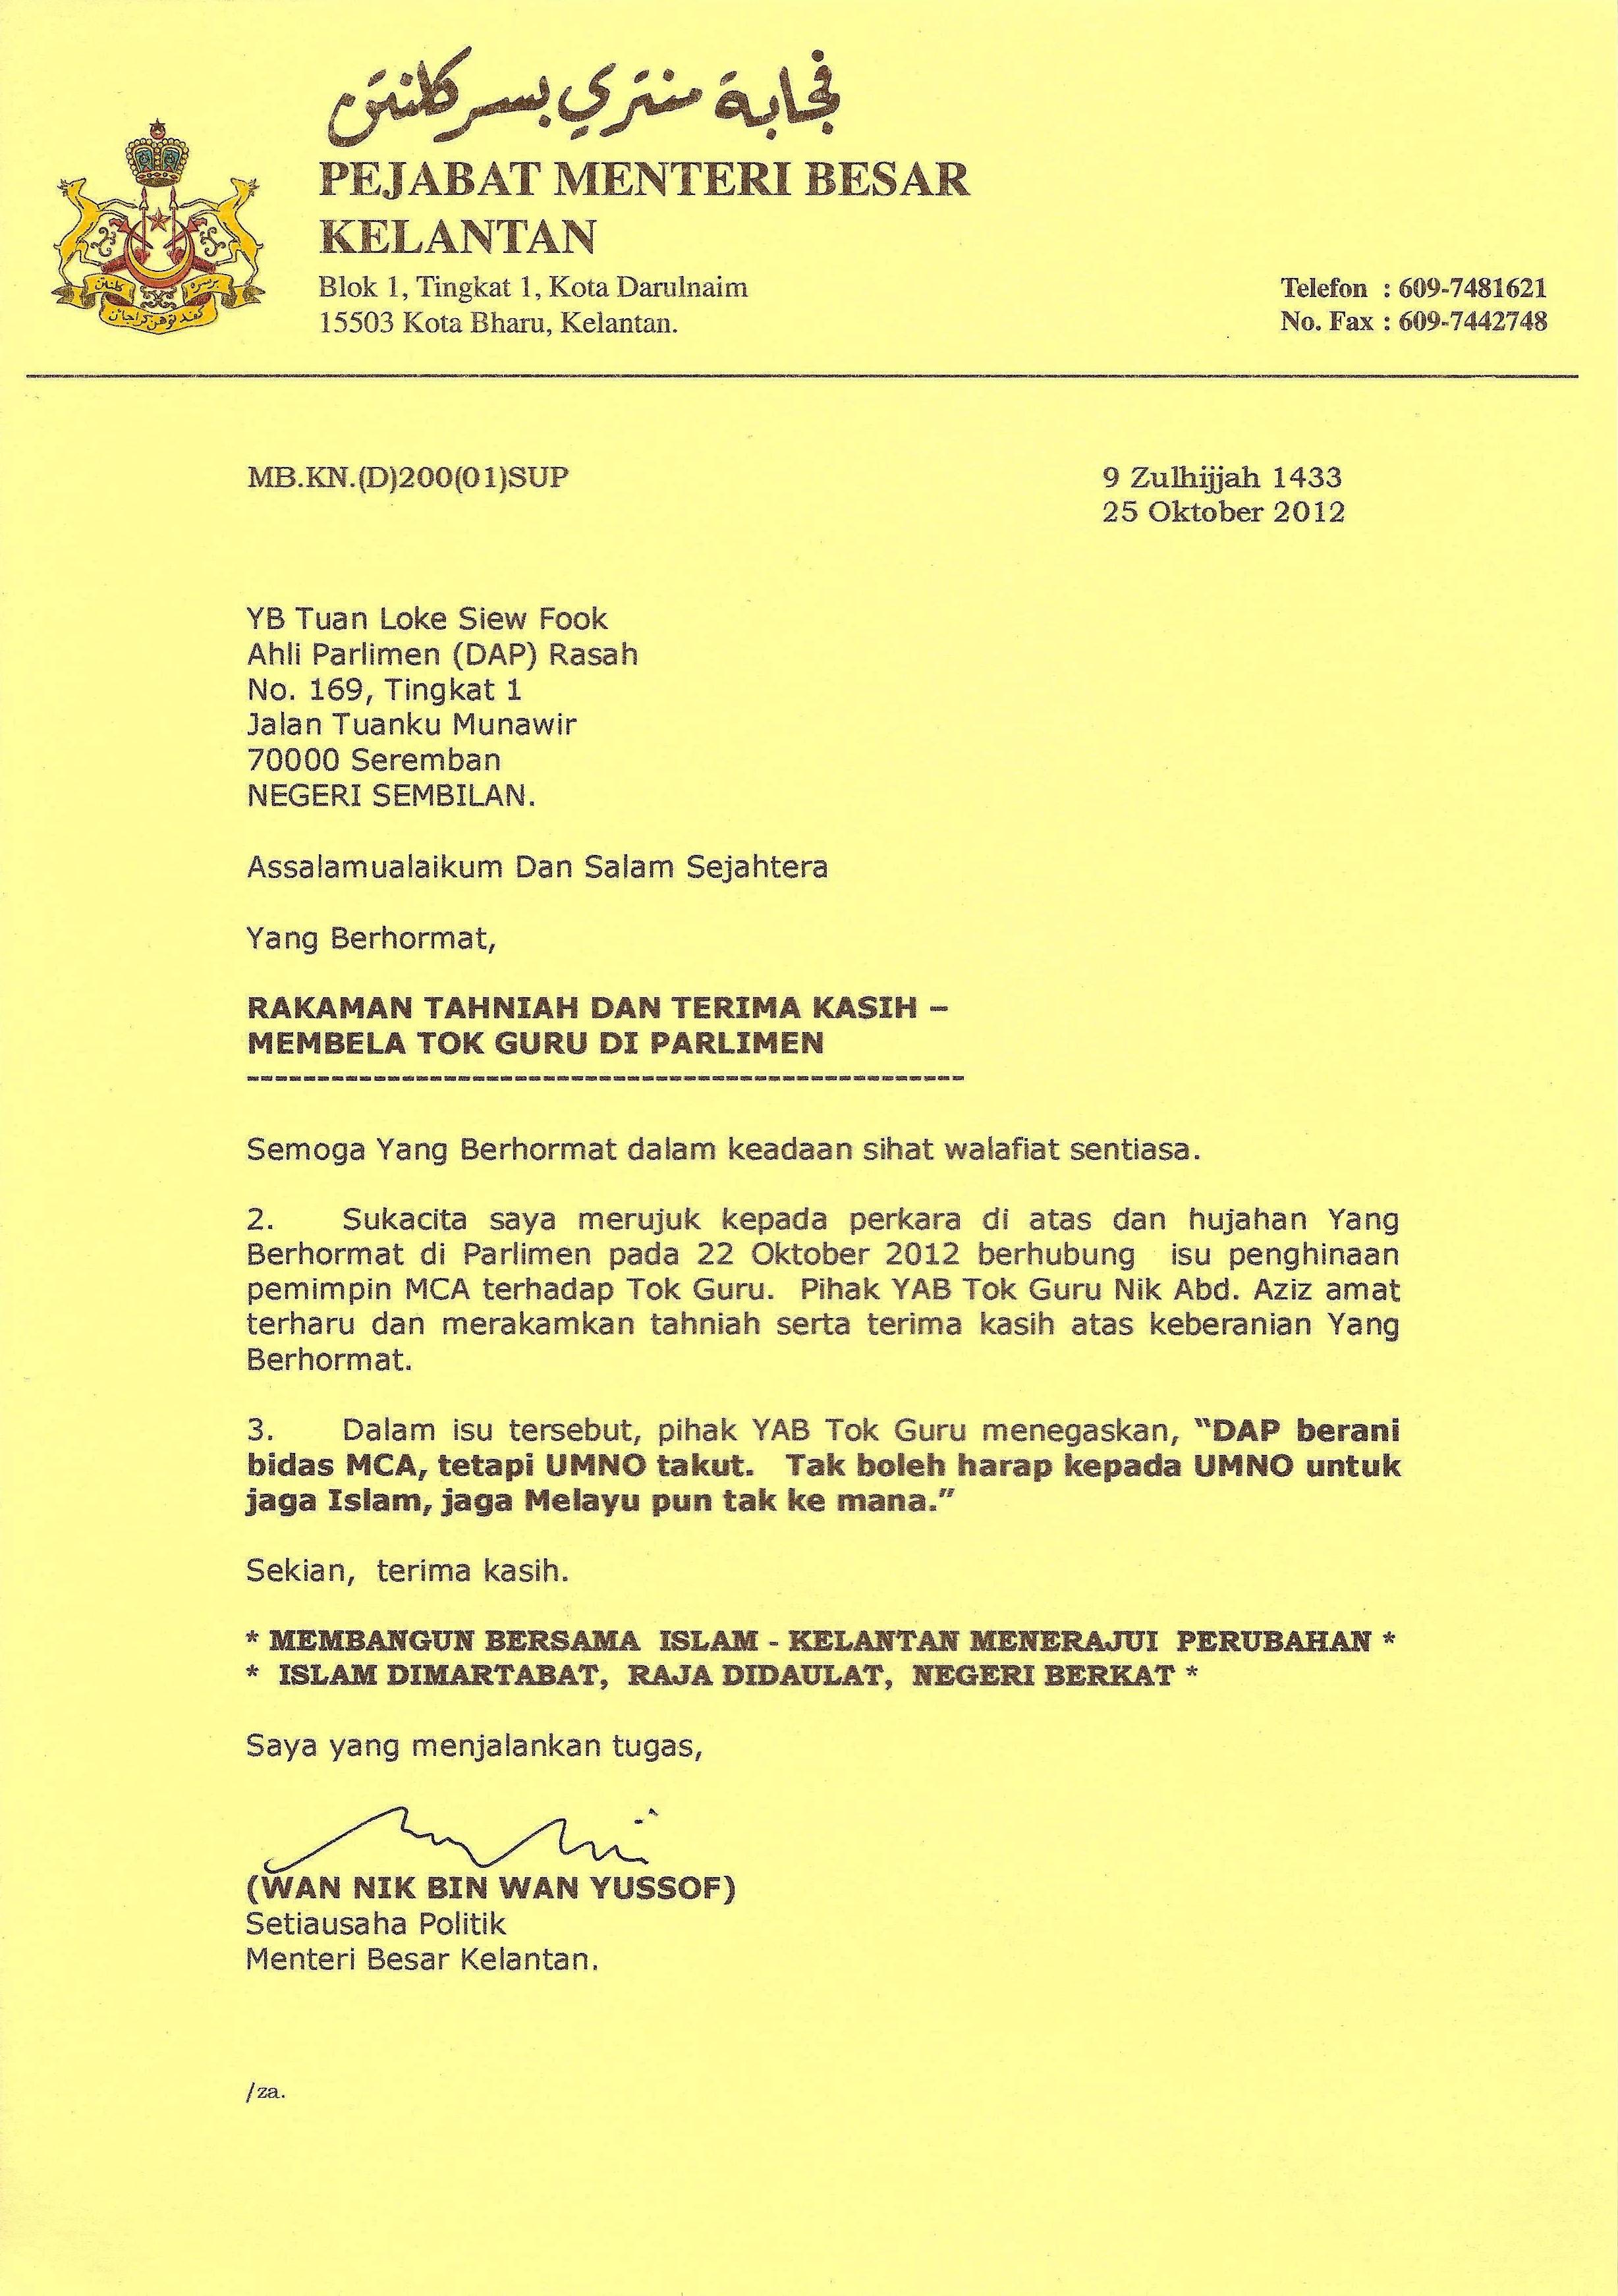 Nik Aziz puji DAP berani bidas MCA.